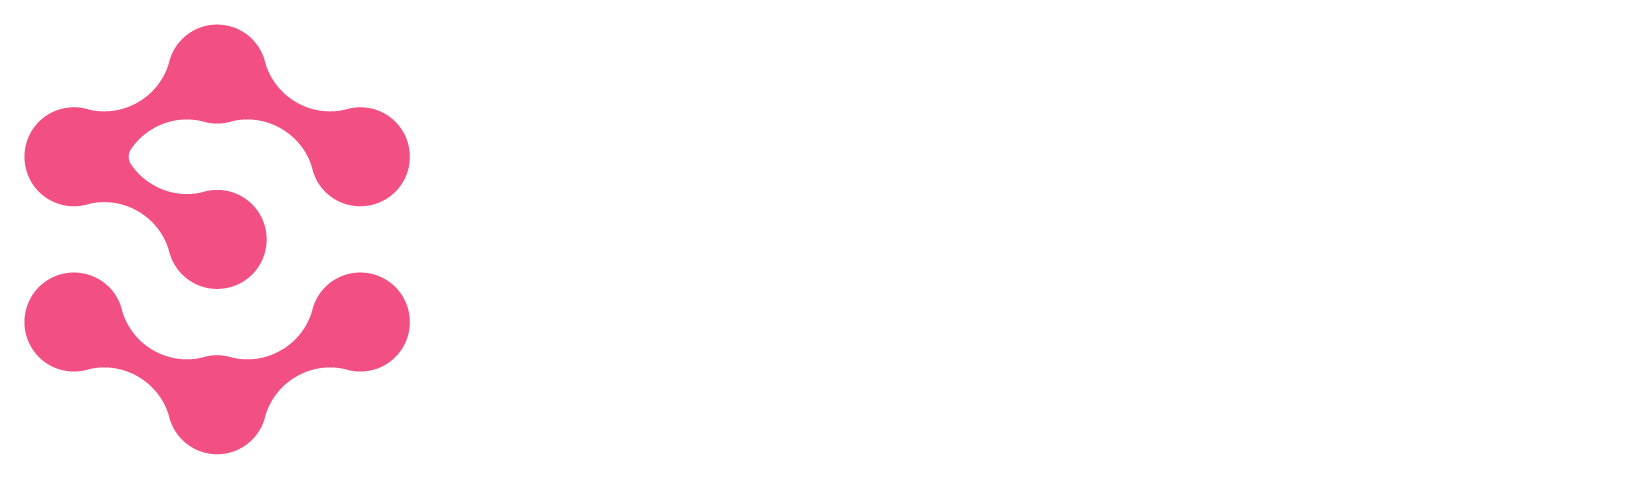 Socean logo